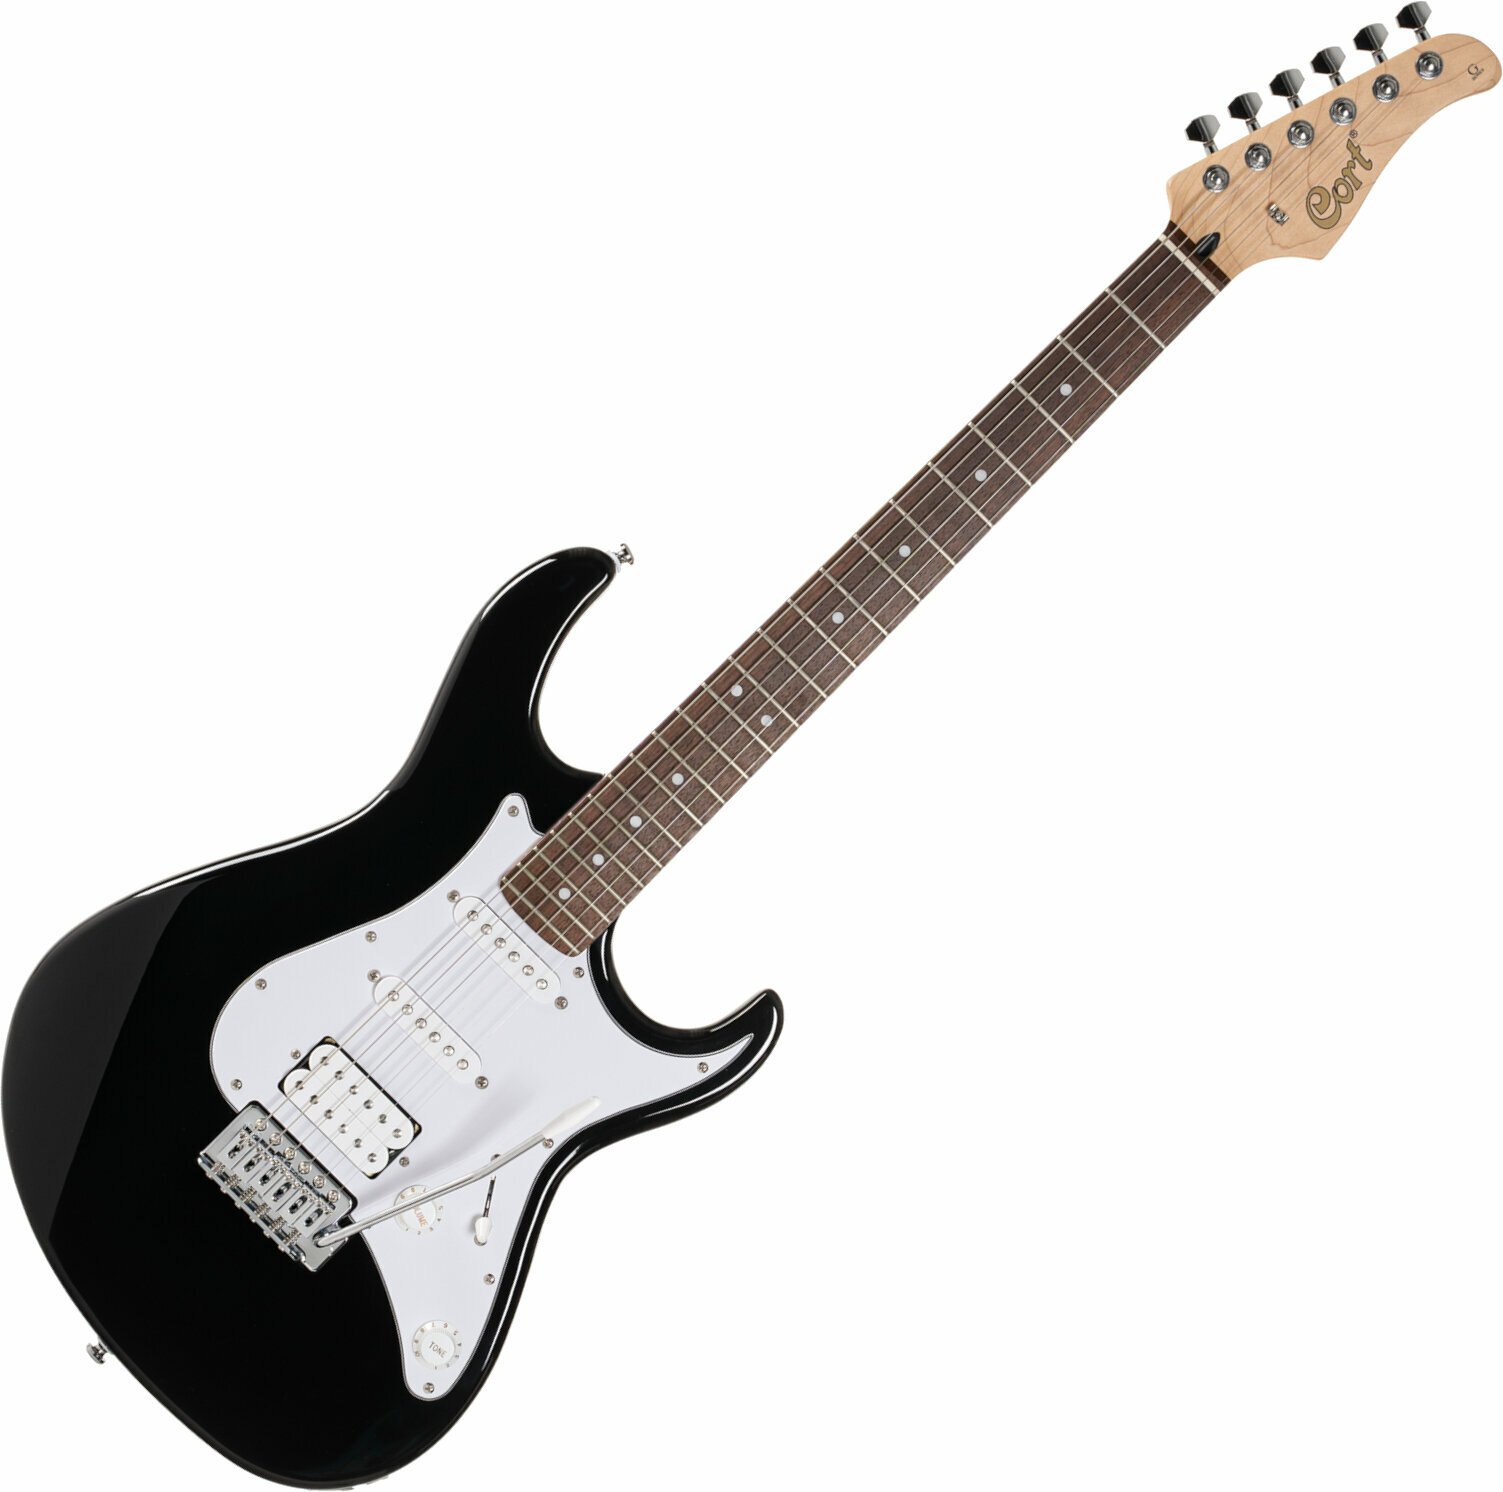 Electric guitar Cort G200 Black